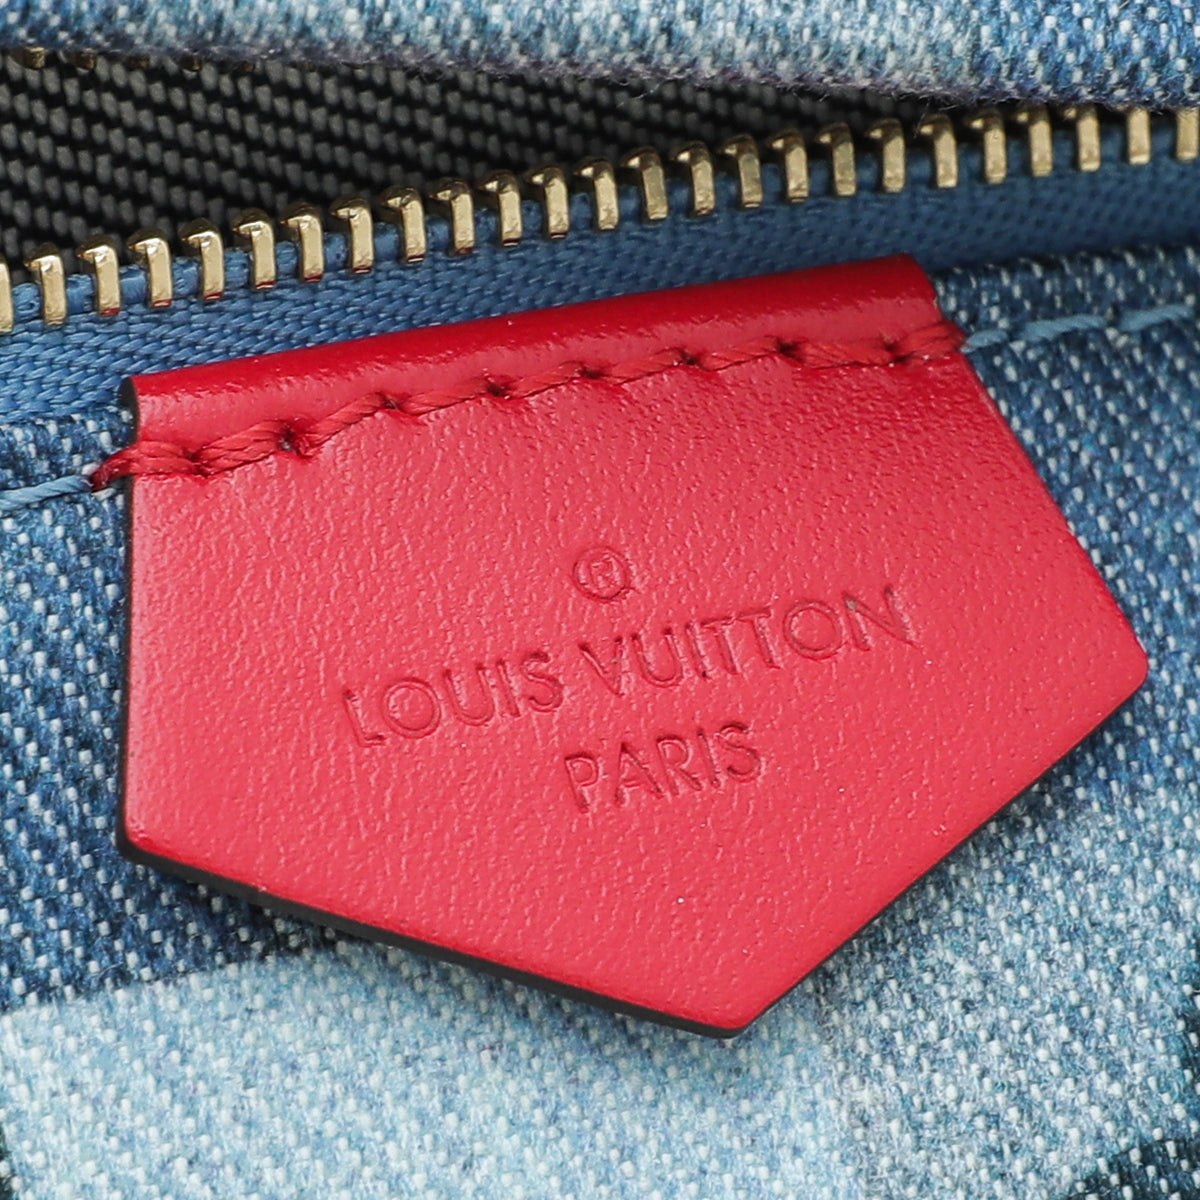 Louis Vuitton Denim Monogram Palm Springs Backpack MINI Blue Red